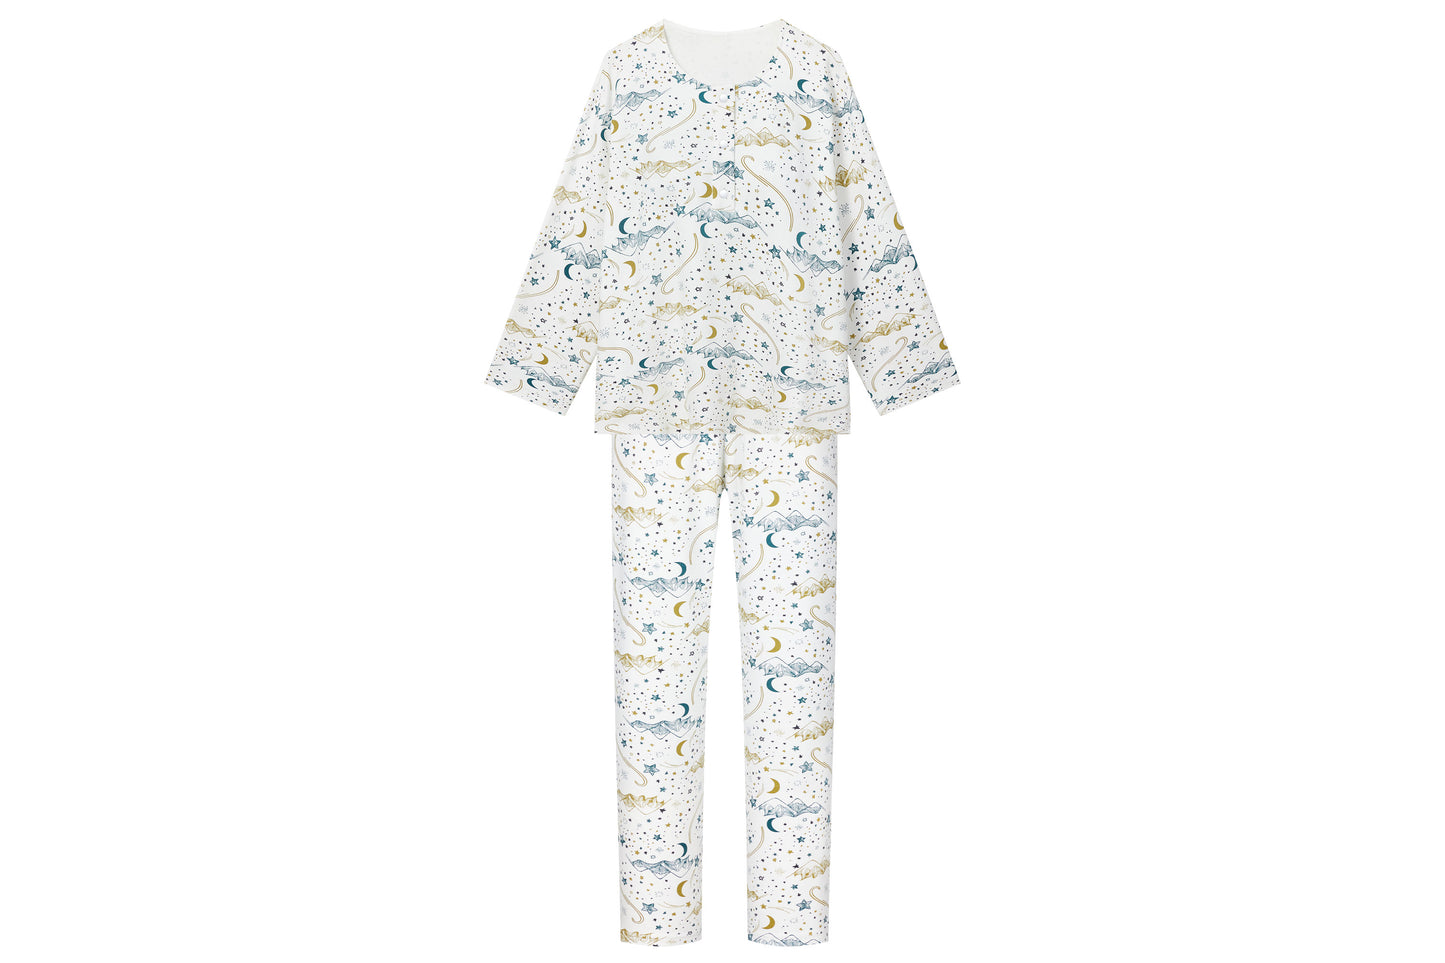 Women's Long Sleeve Nursing PJ Set (Cotton) - Stars White